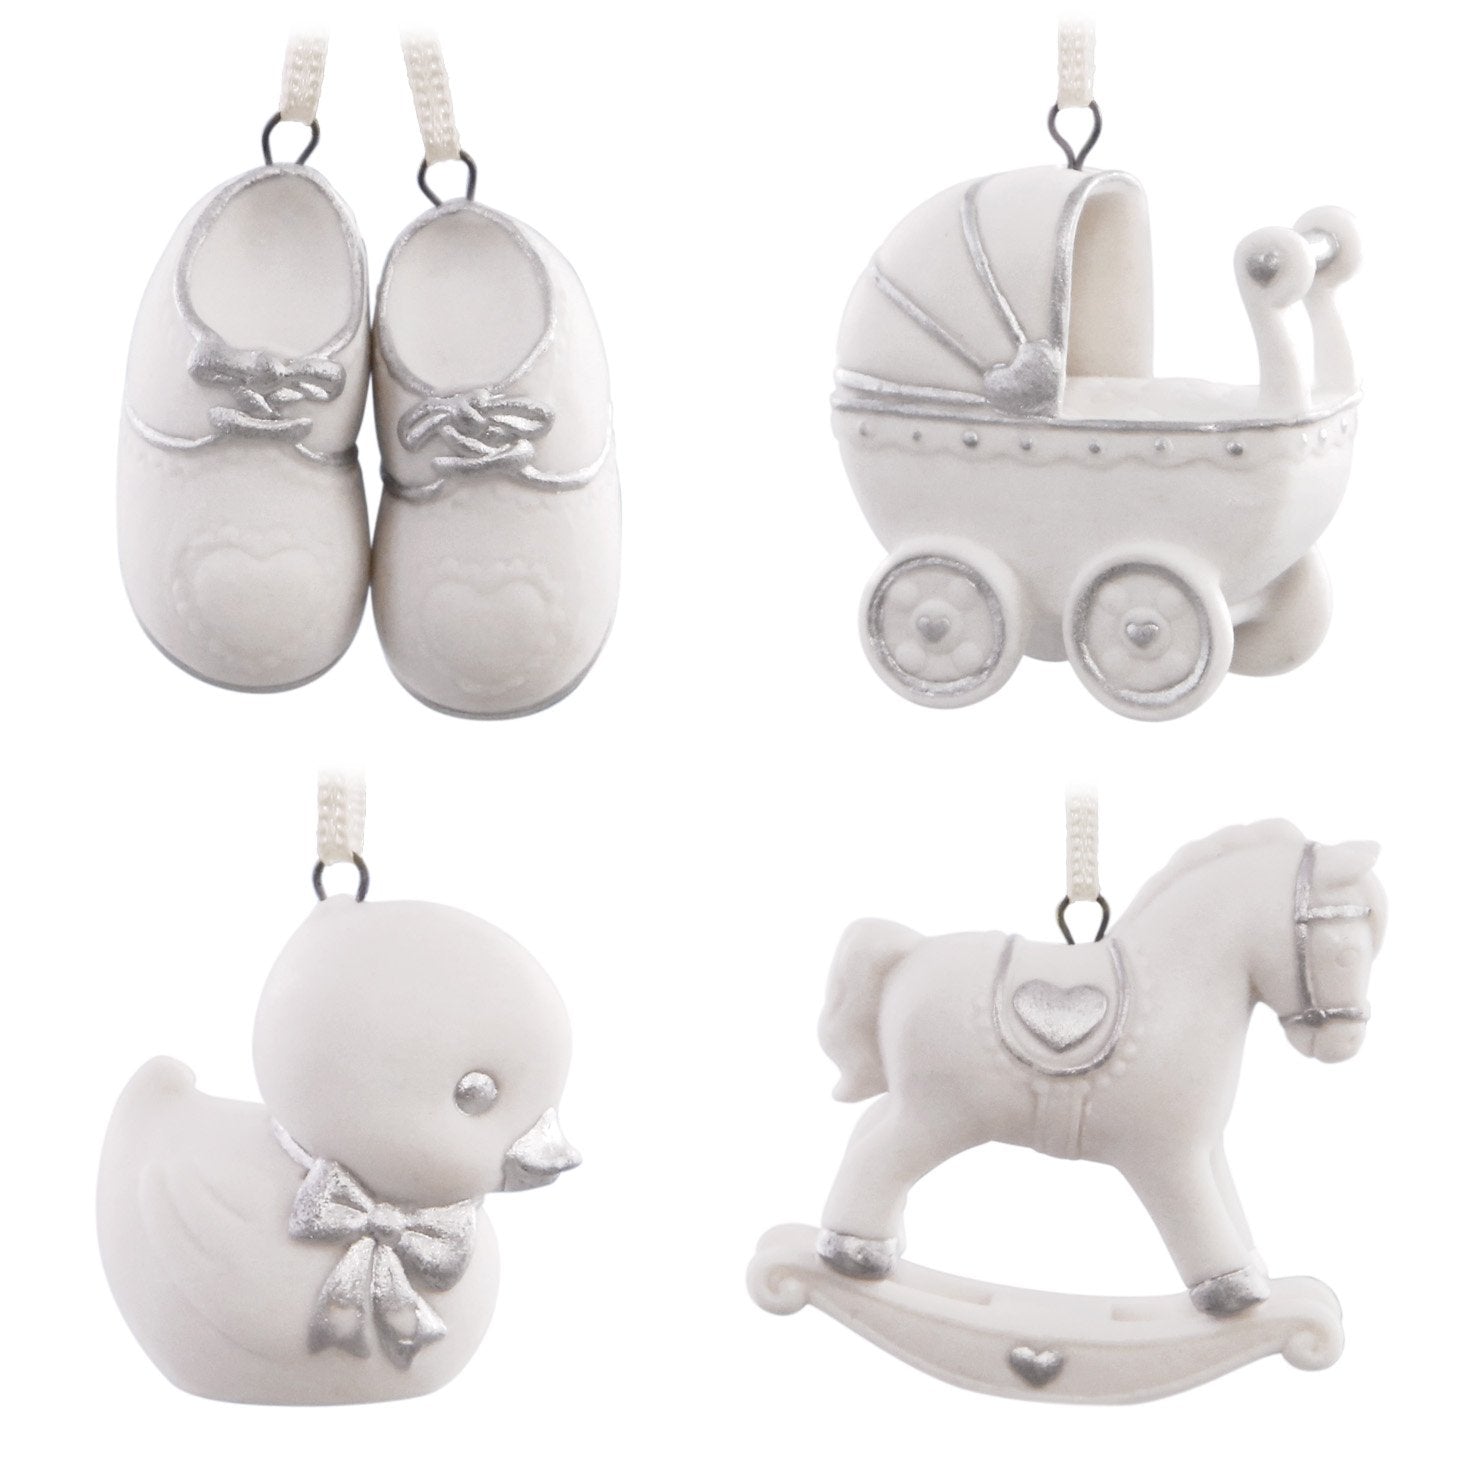 Hallmark Keepsake 2017 Welcome Baby Mini Porcelain Premium Christmas Ornaments, Set of 4